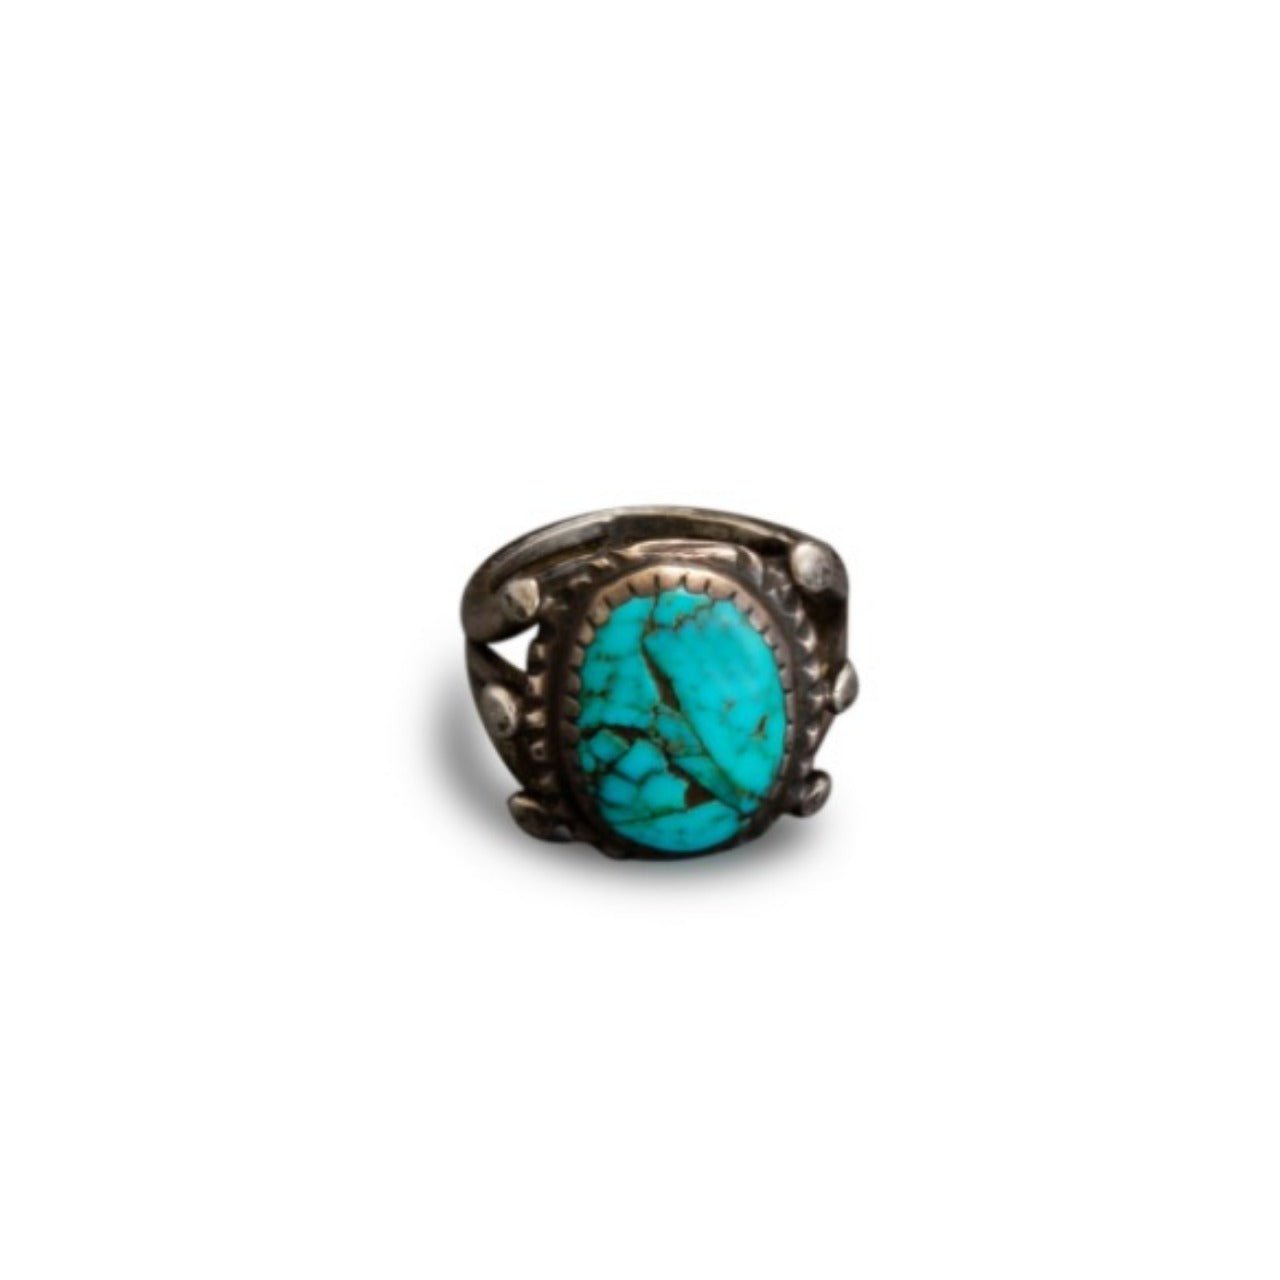 Early Turquoise Ring With Cracked Stone - Turquoise & Tufa